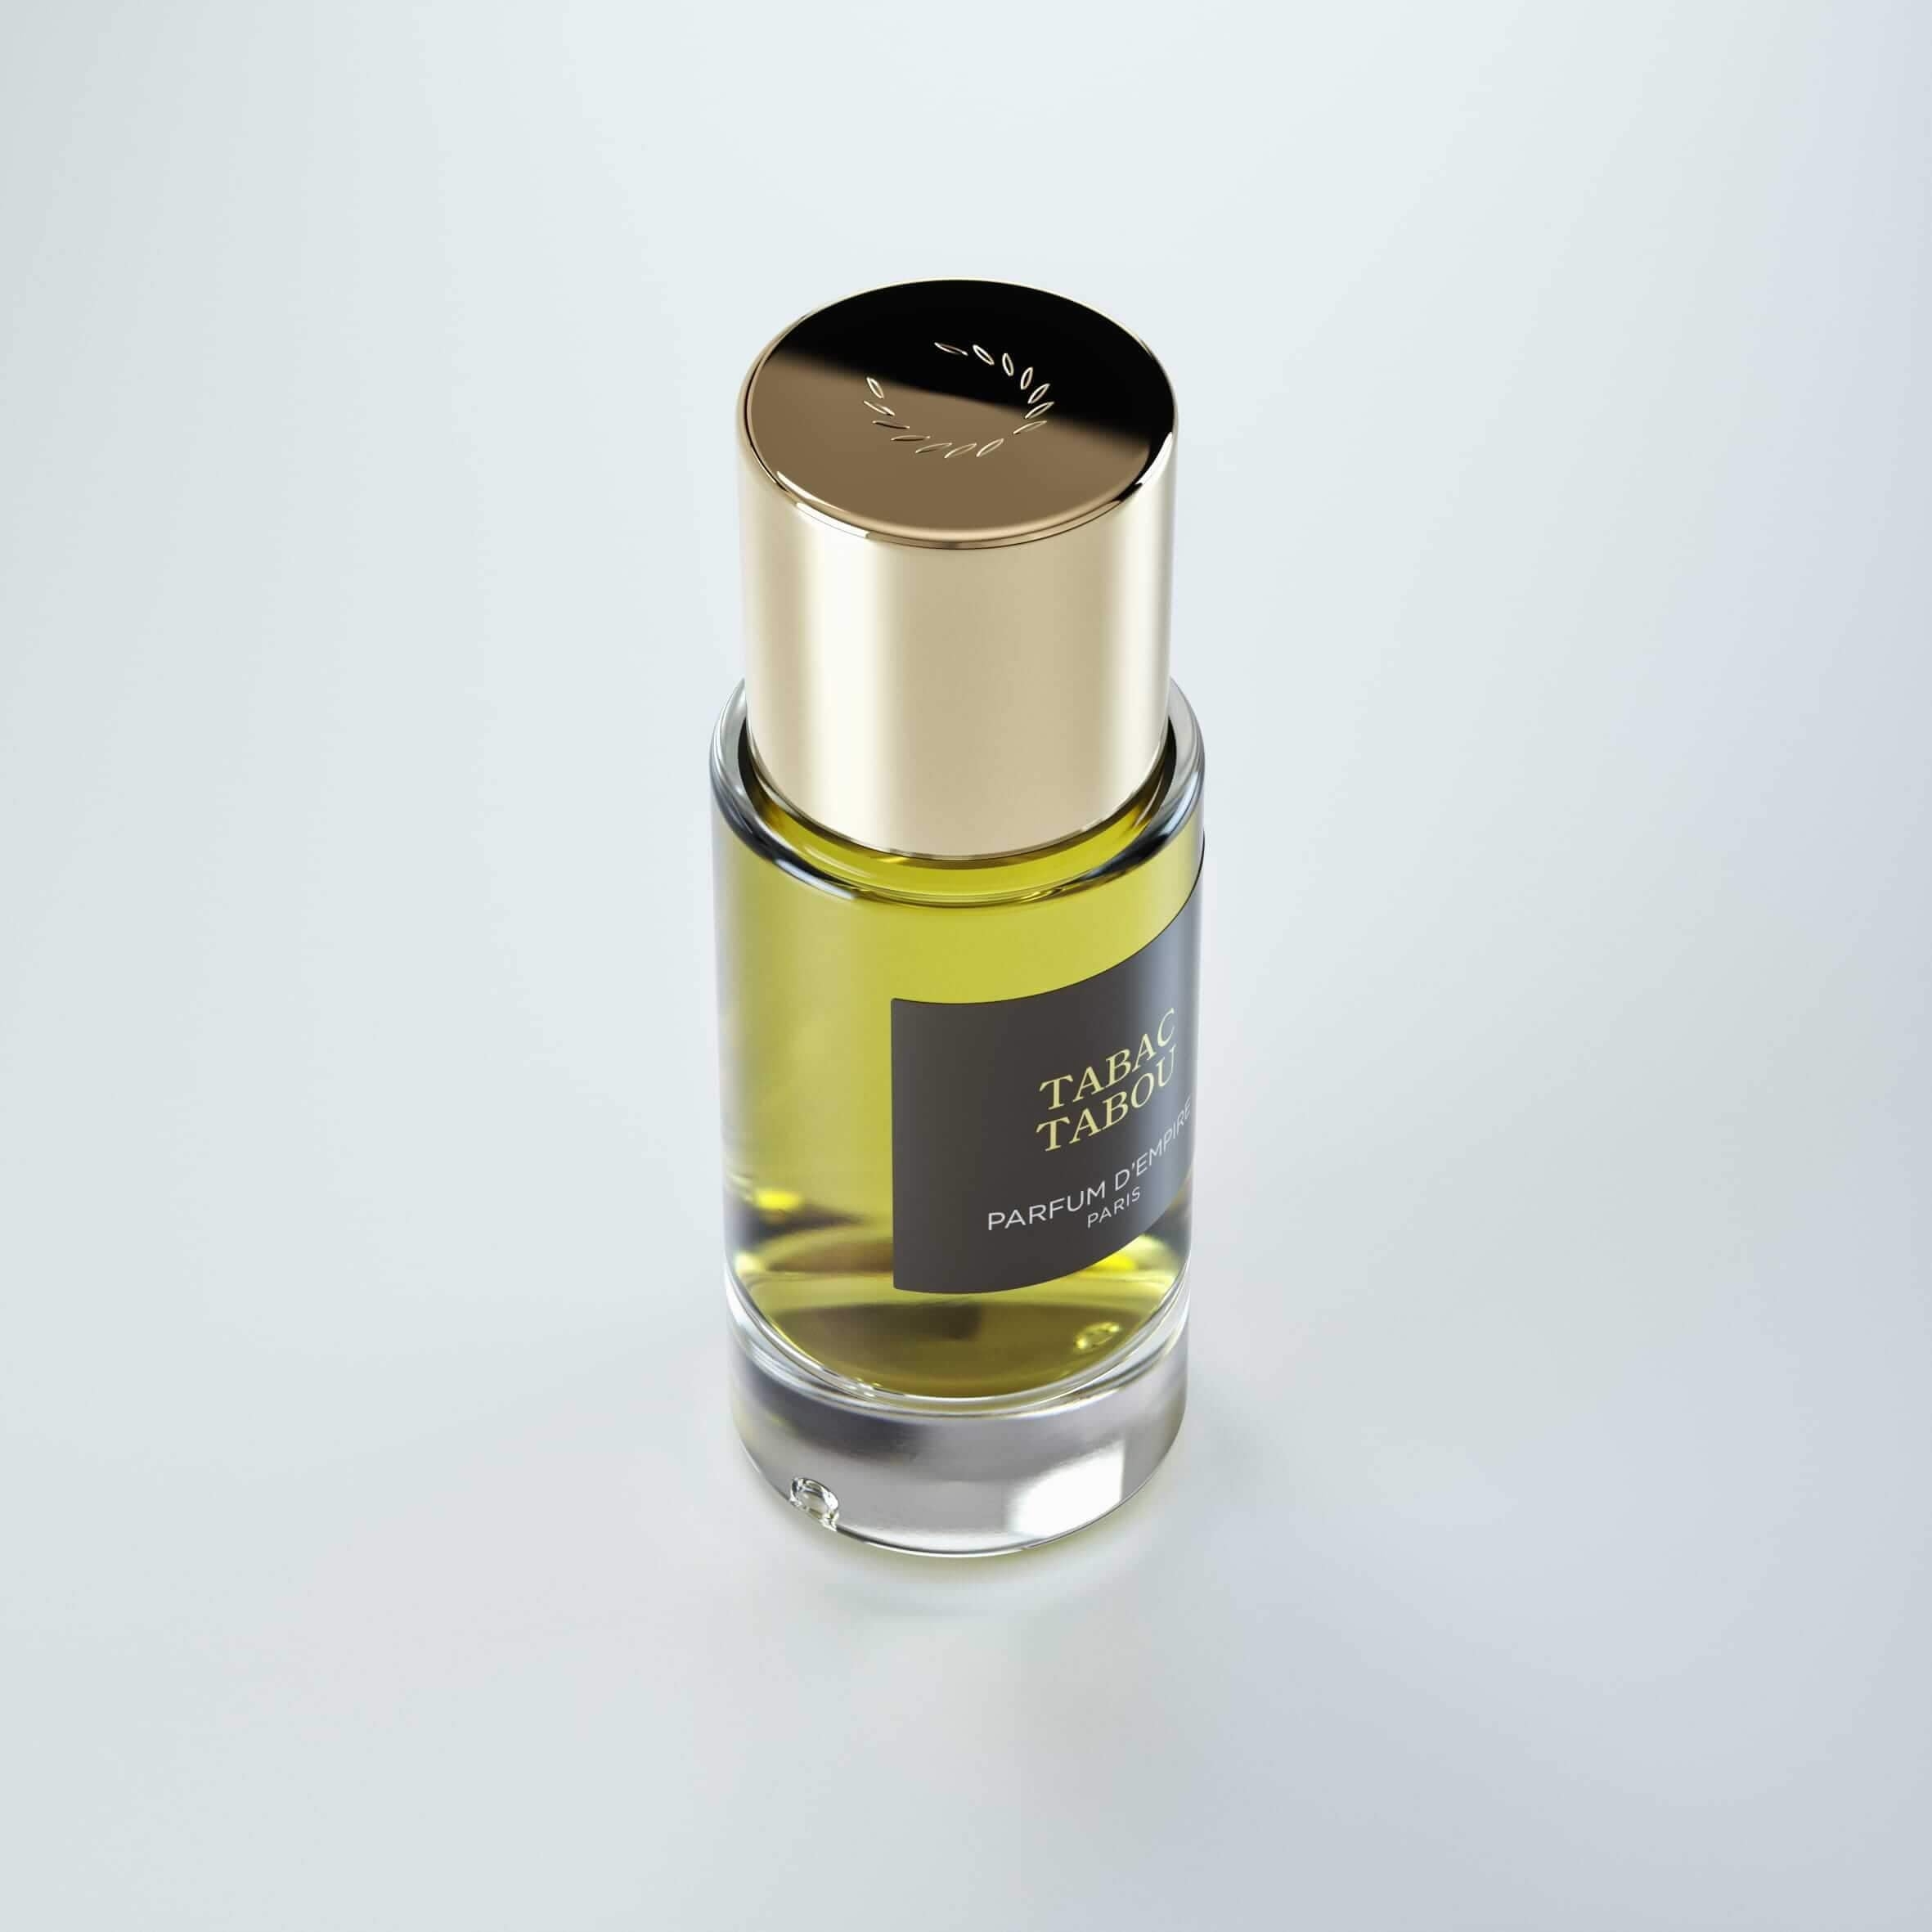 Parfum d'Empire - Tabac Tabou | Perfume Lounge